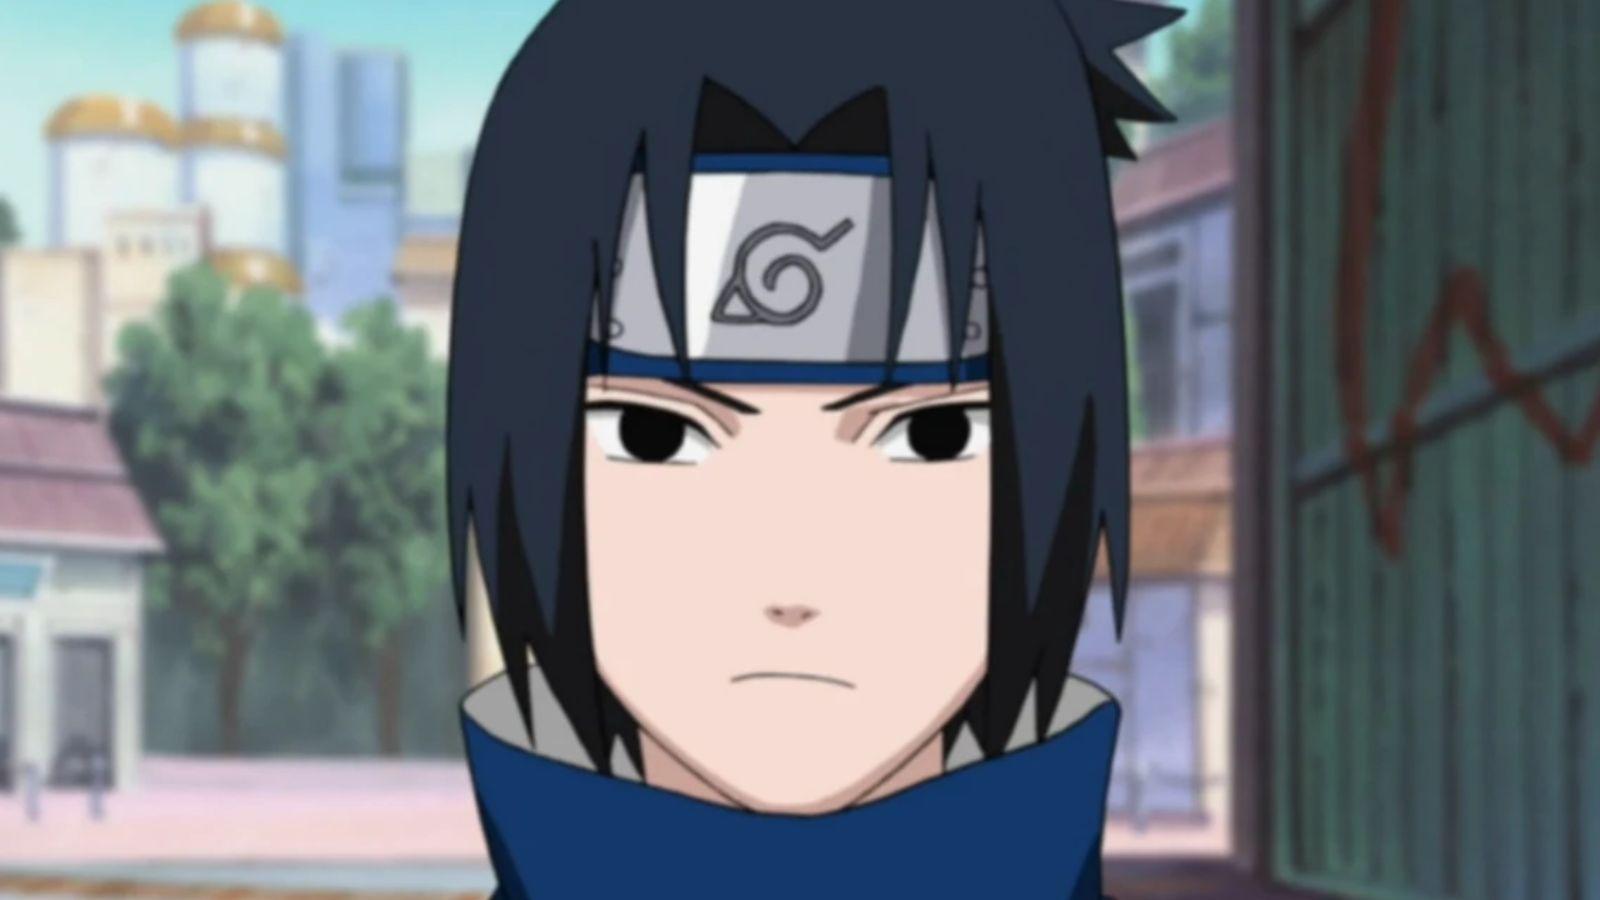 Sasuke from Narutoverse